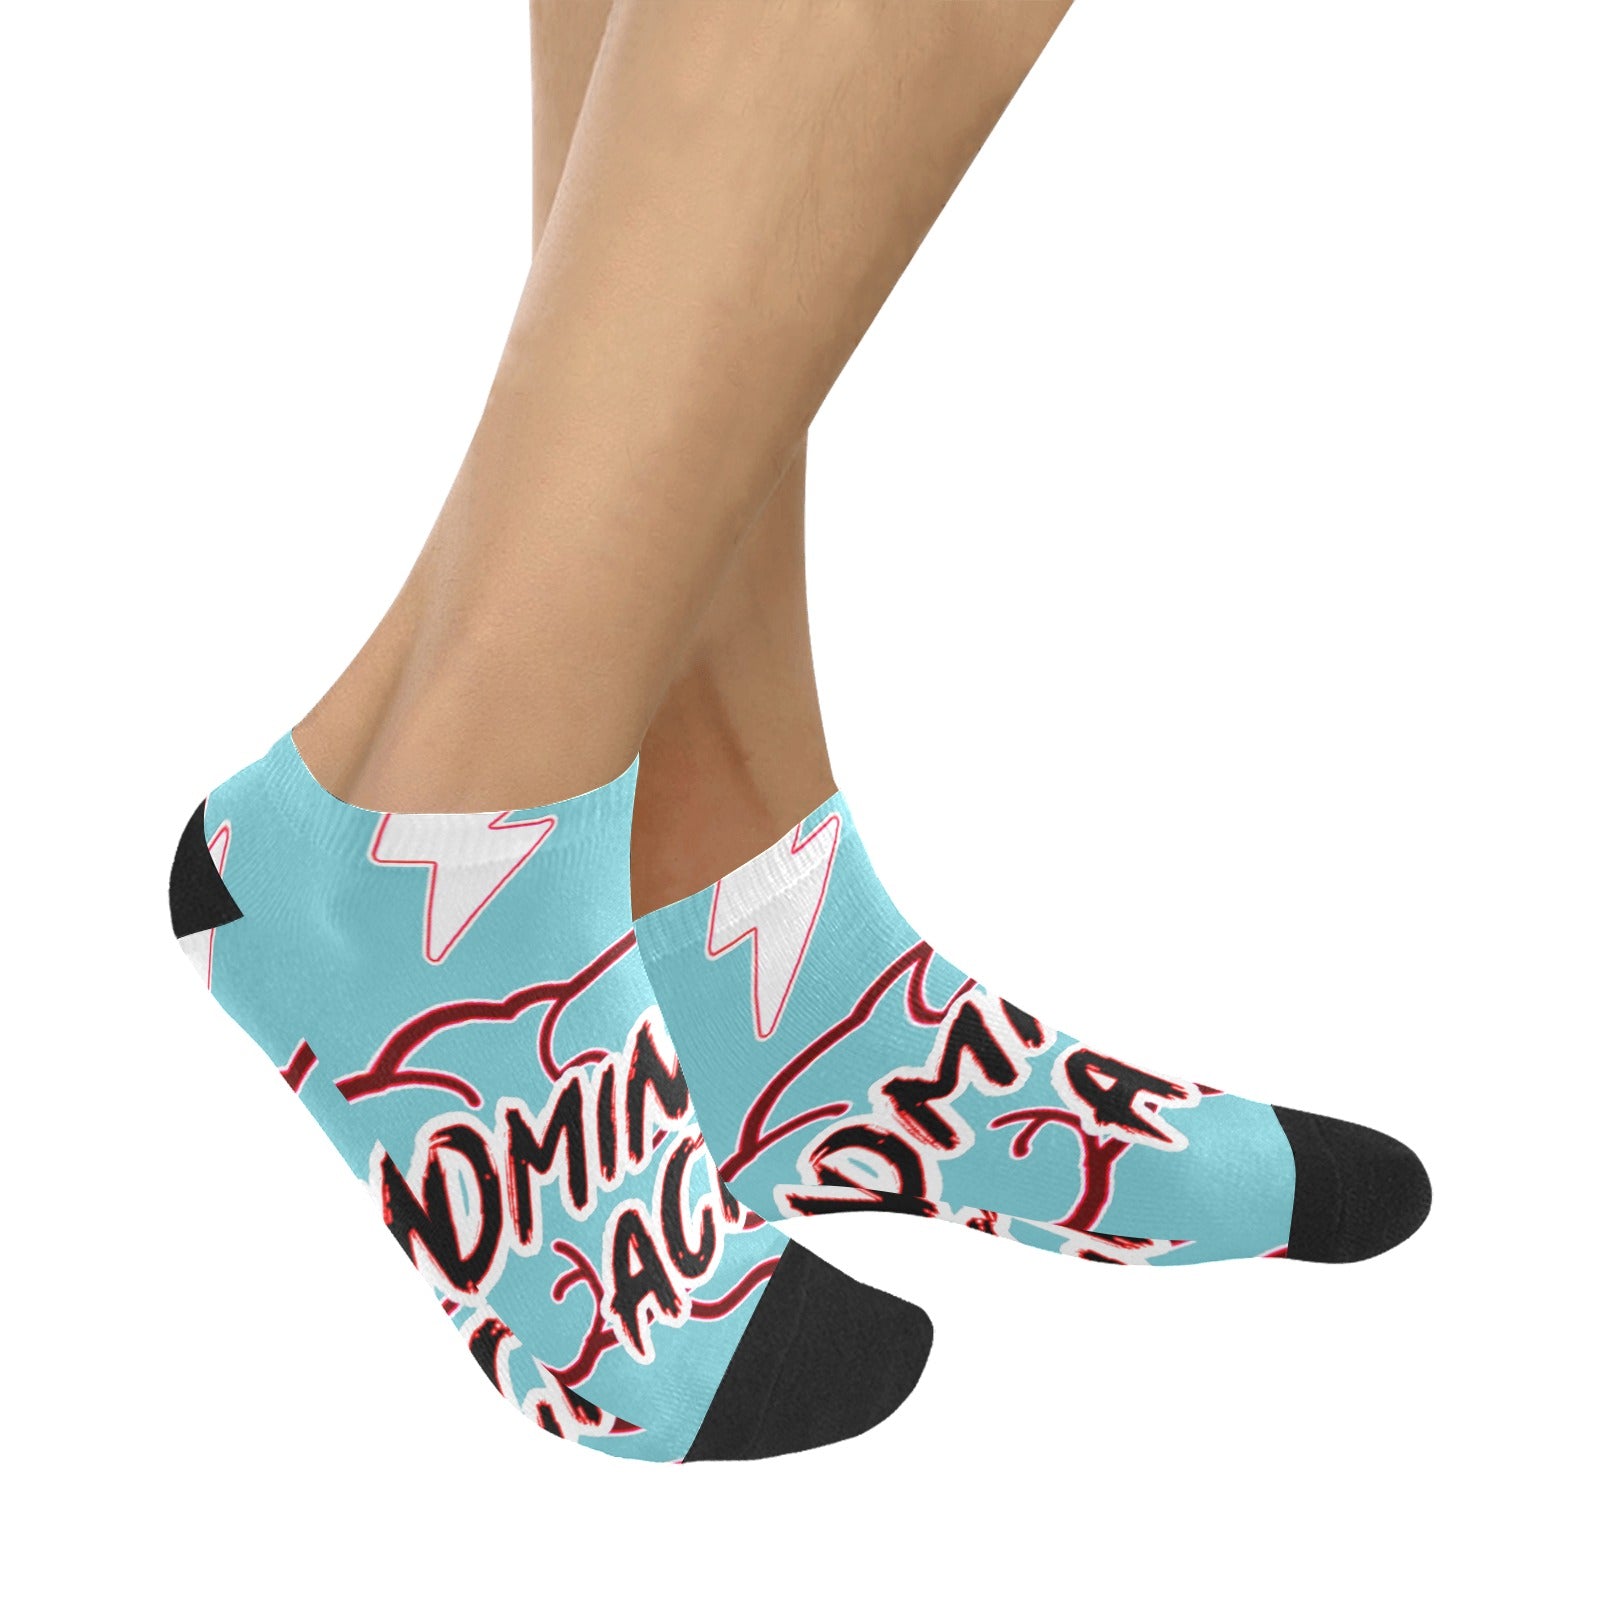 fz men's mind ankle socks one size / fz mind socks - new blue men's ankle socks